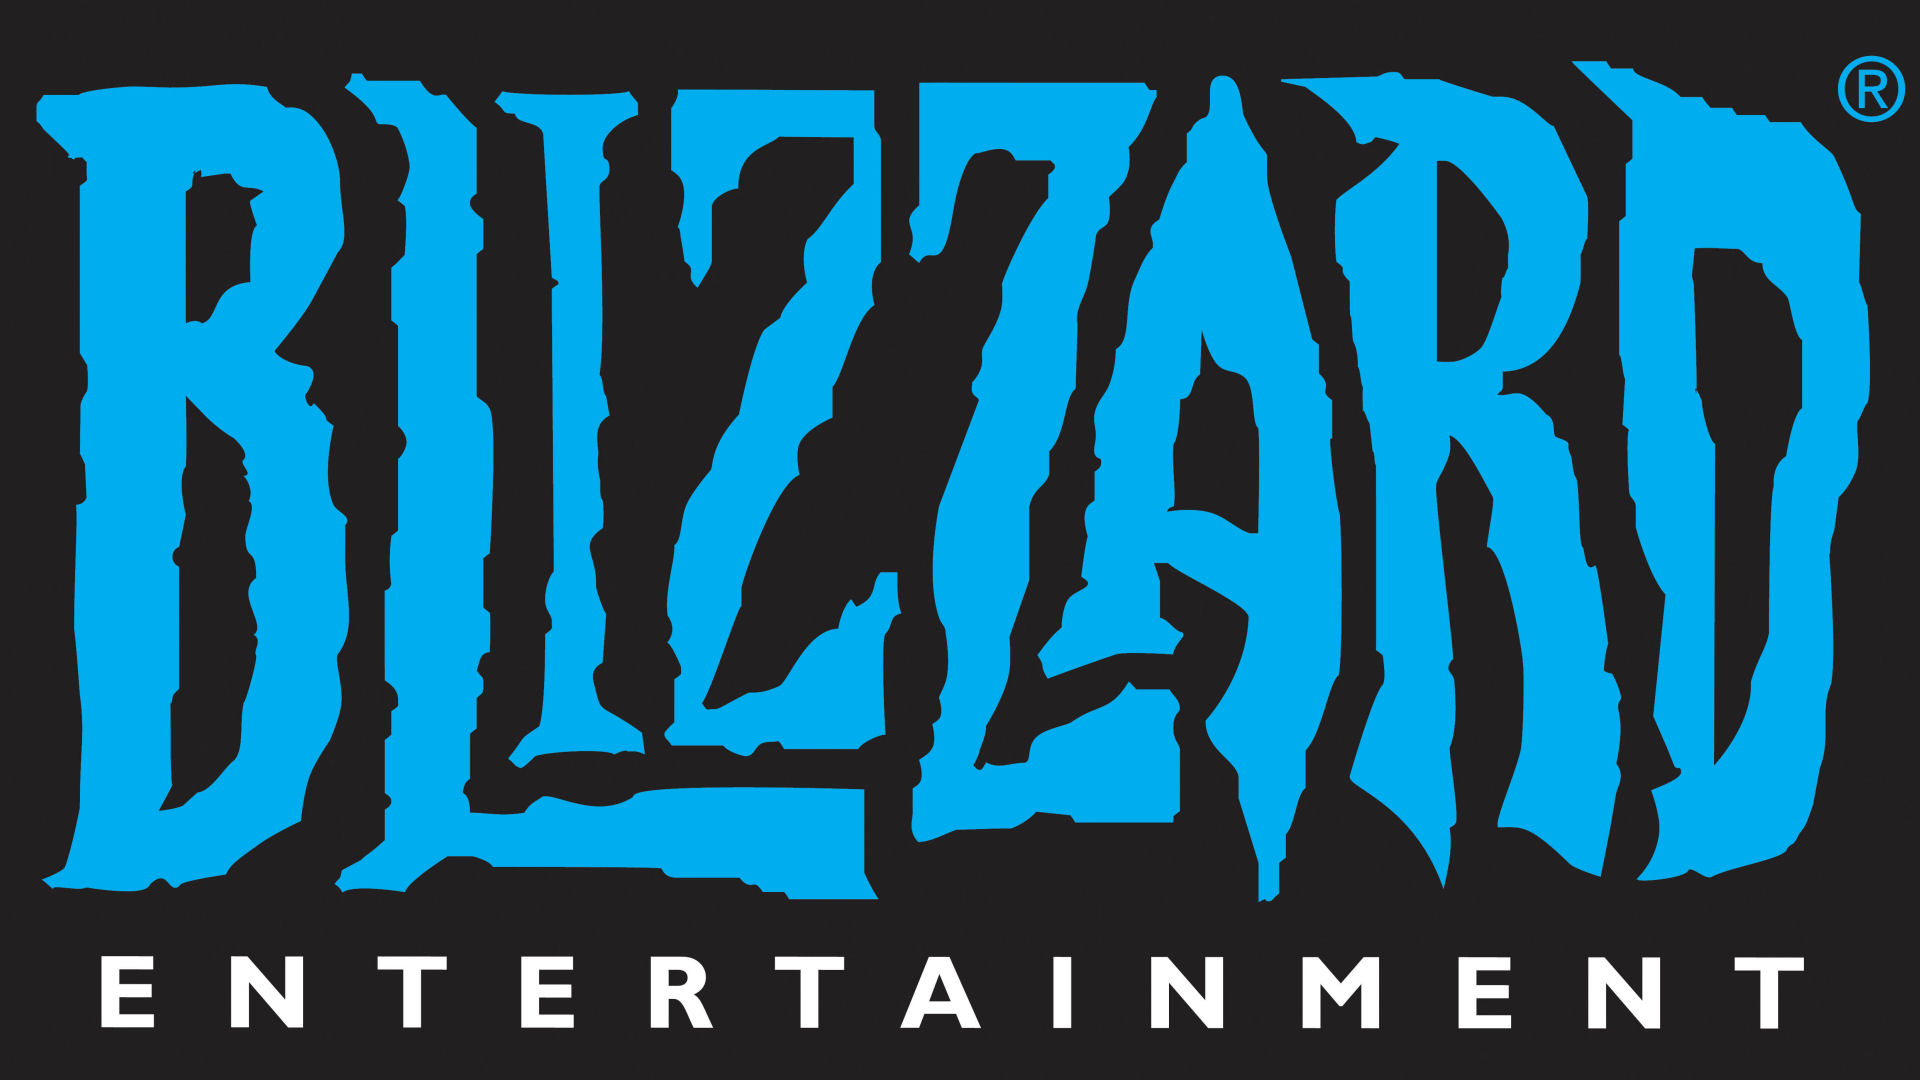 New Blizzard Entertainment Twitter Account